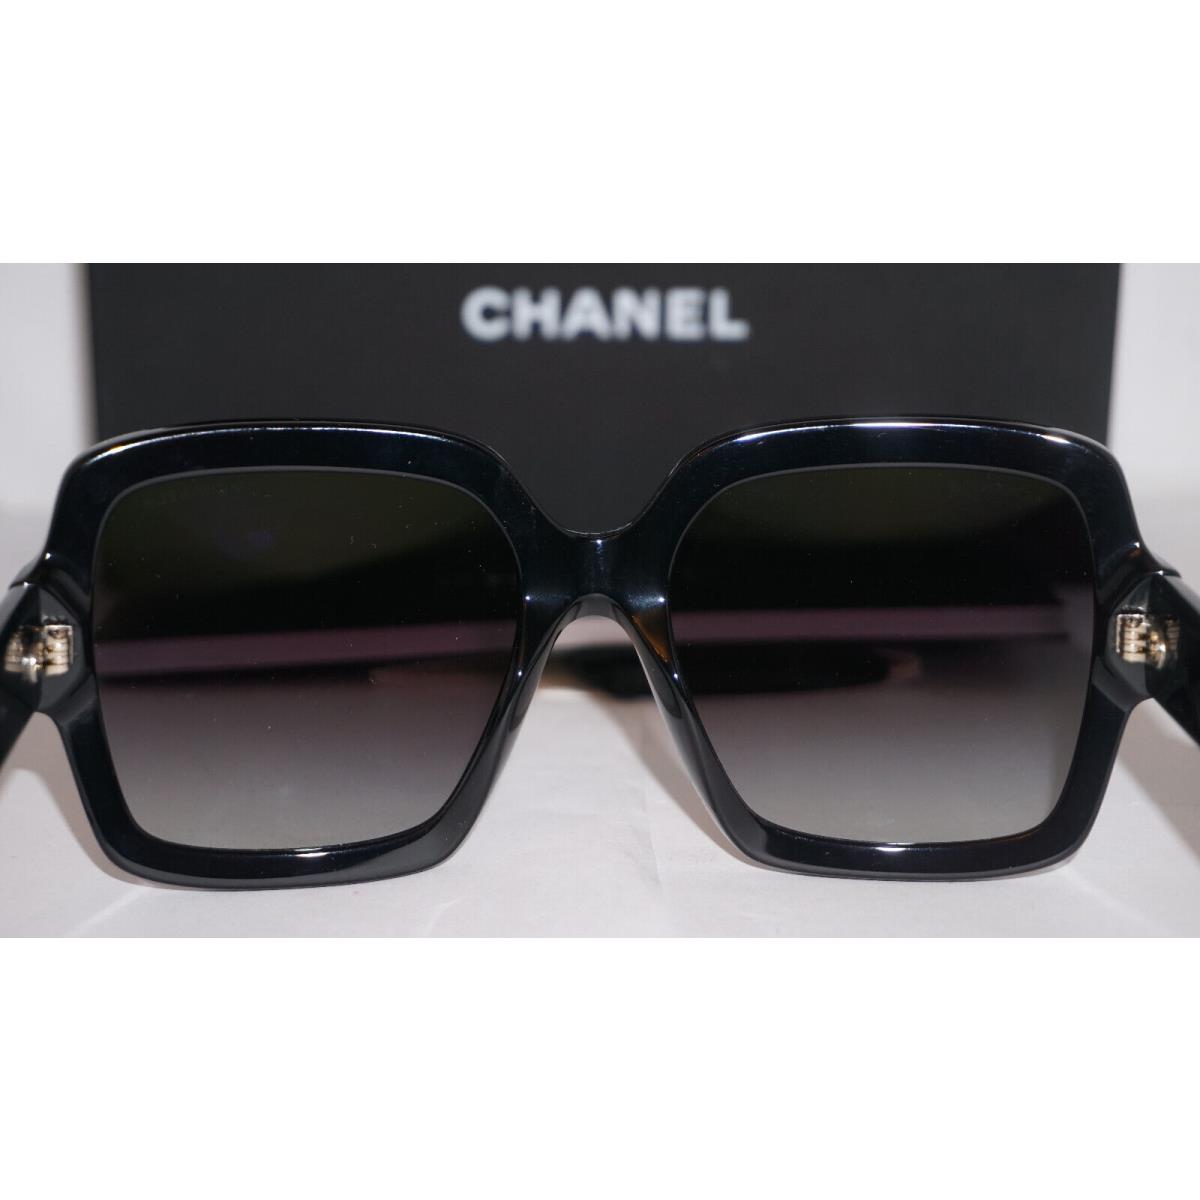 CHANEL | Accessories | Chanel Rare And Limited Leather Ski Style Sunglasses  | Poshmark